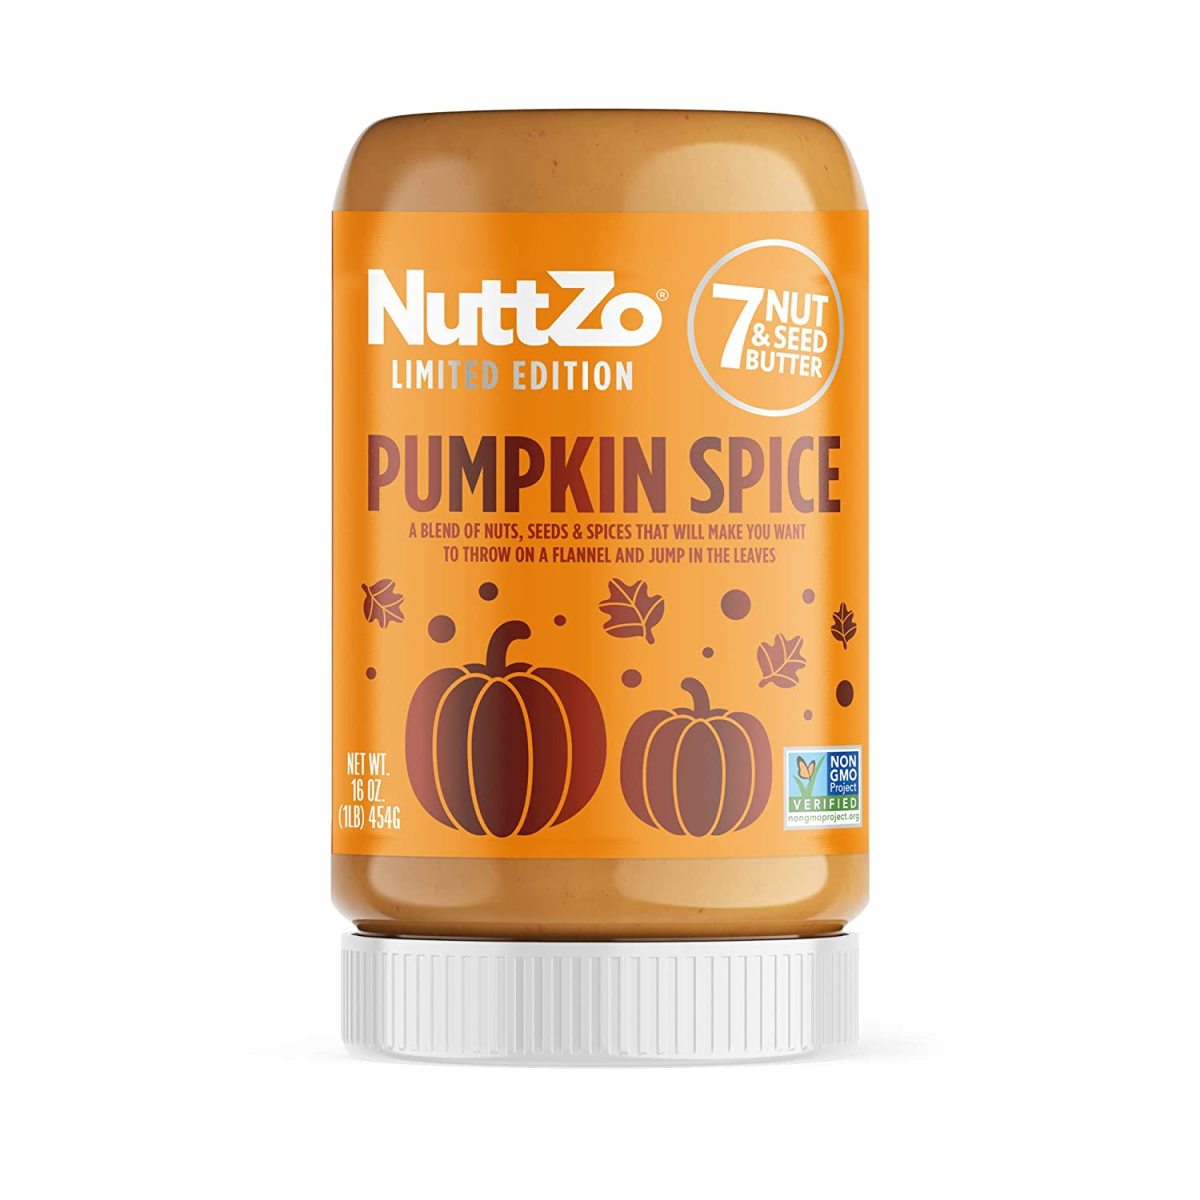 NuttZo Limited Edition Pumpkin Spice Power Fuel Crunchy Nut Butter by NuttZo